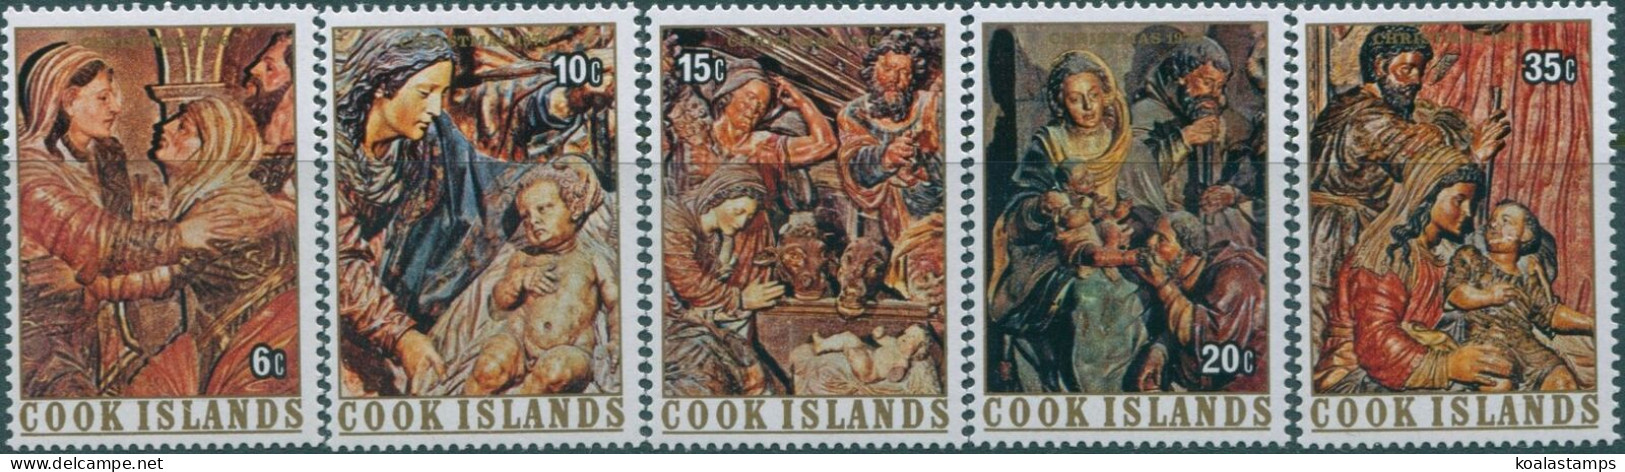 Cook Islands 1976 SG556-560 Christmas Set MNH - Cook Islands